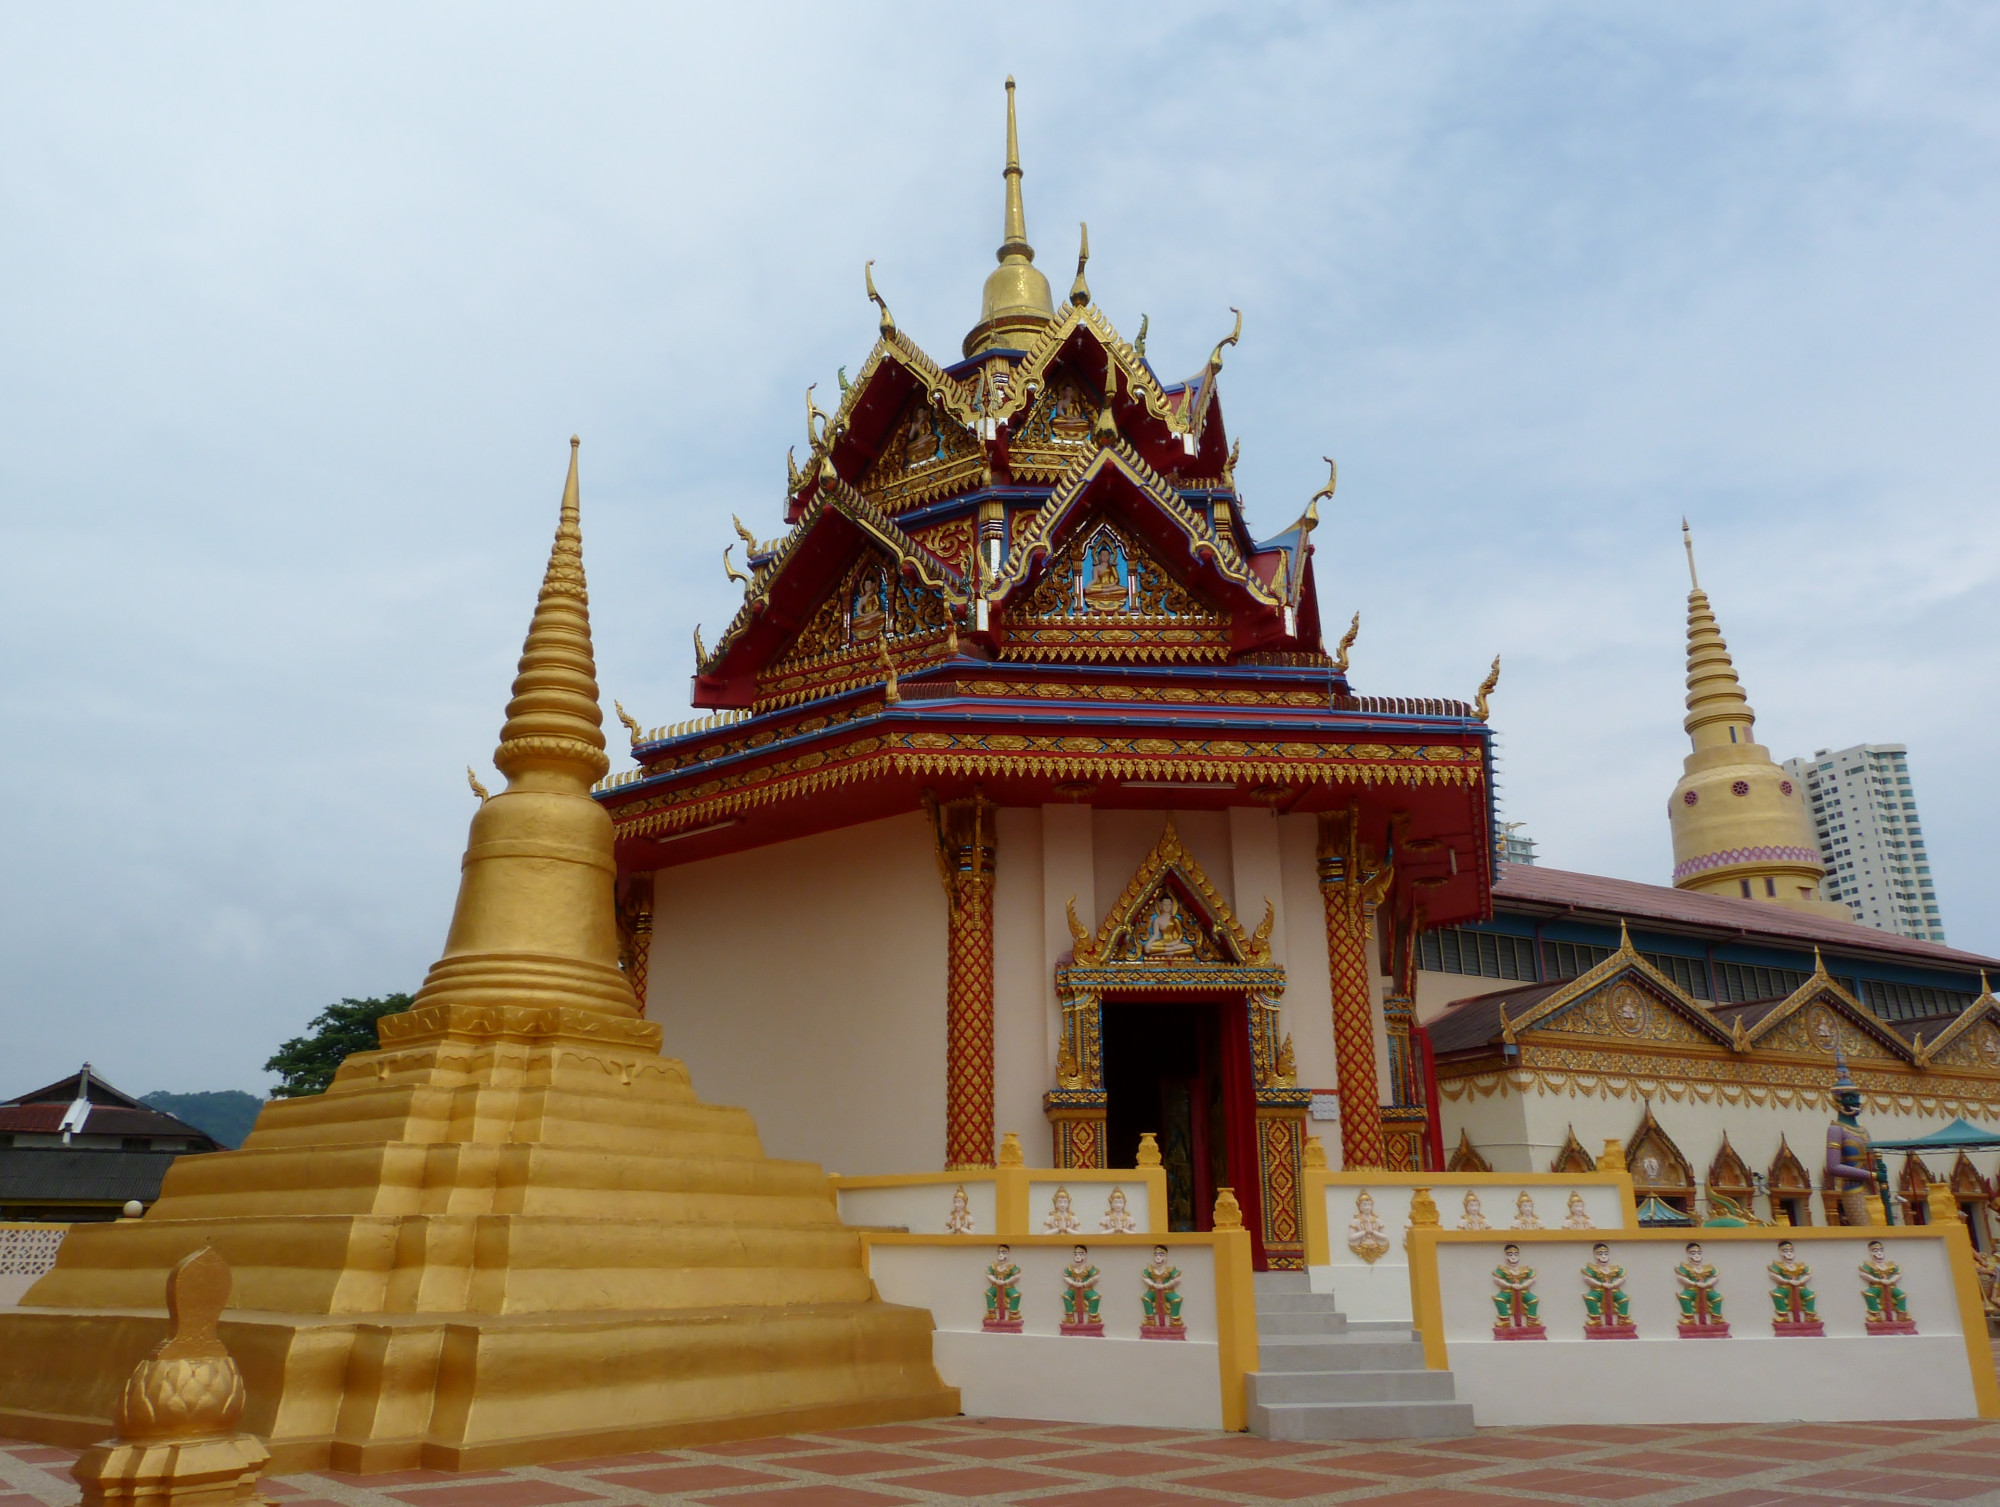 The Buddhist Triple Wisdom Hall Entrance